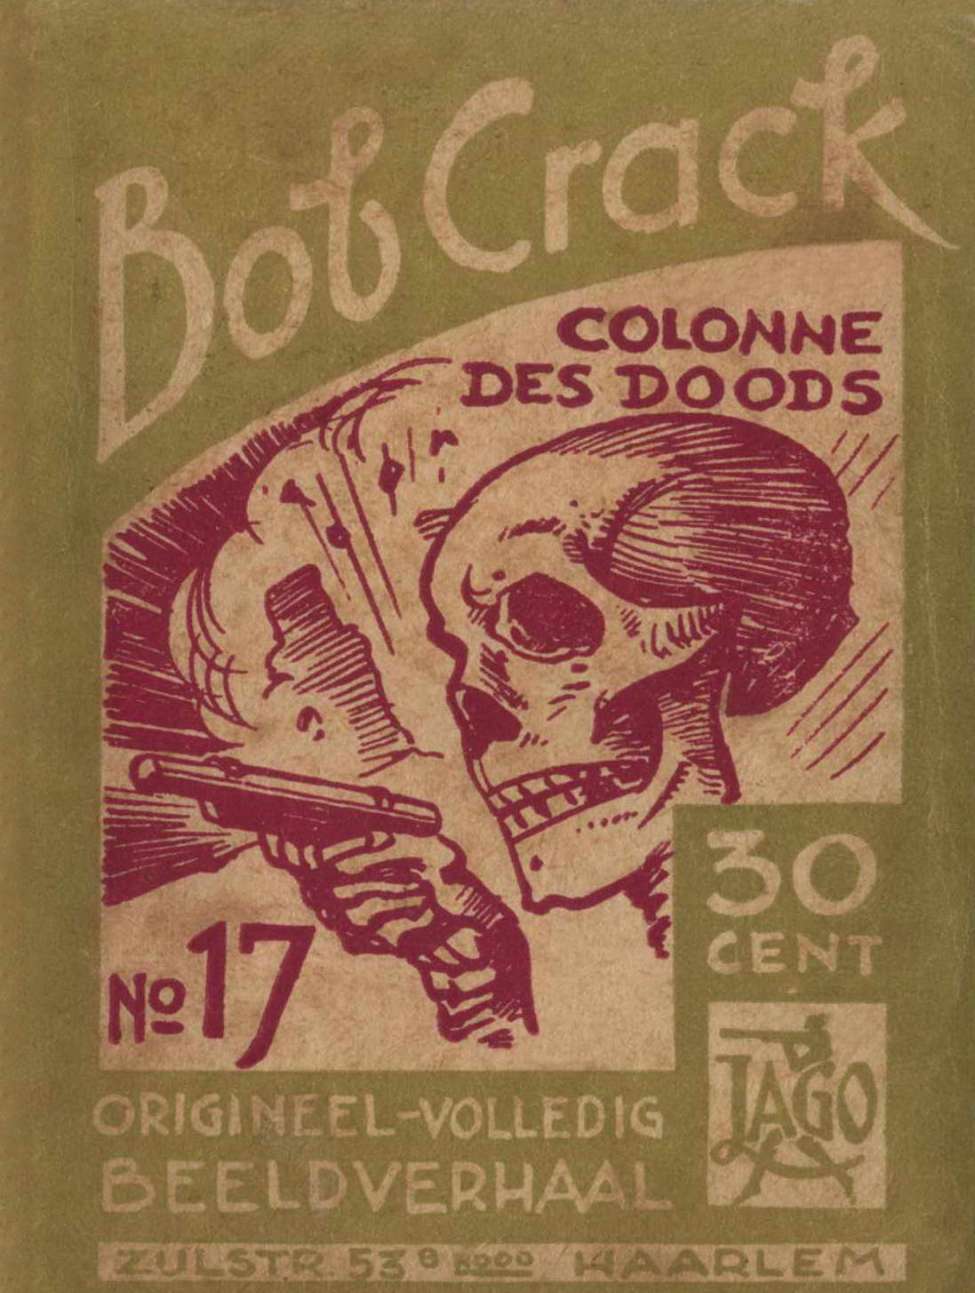 Book Cover For Bob Crack 17 Colonne des doods